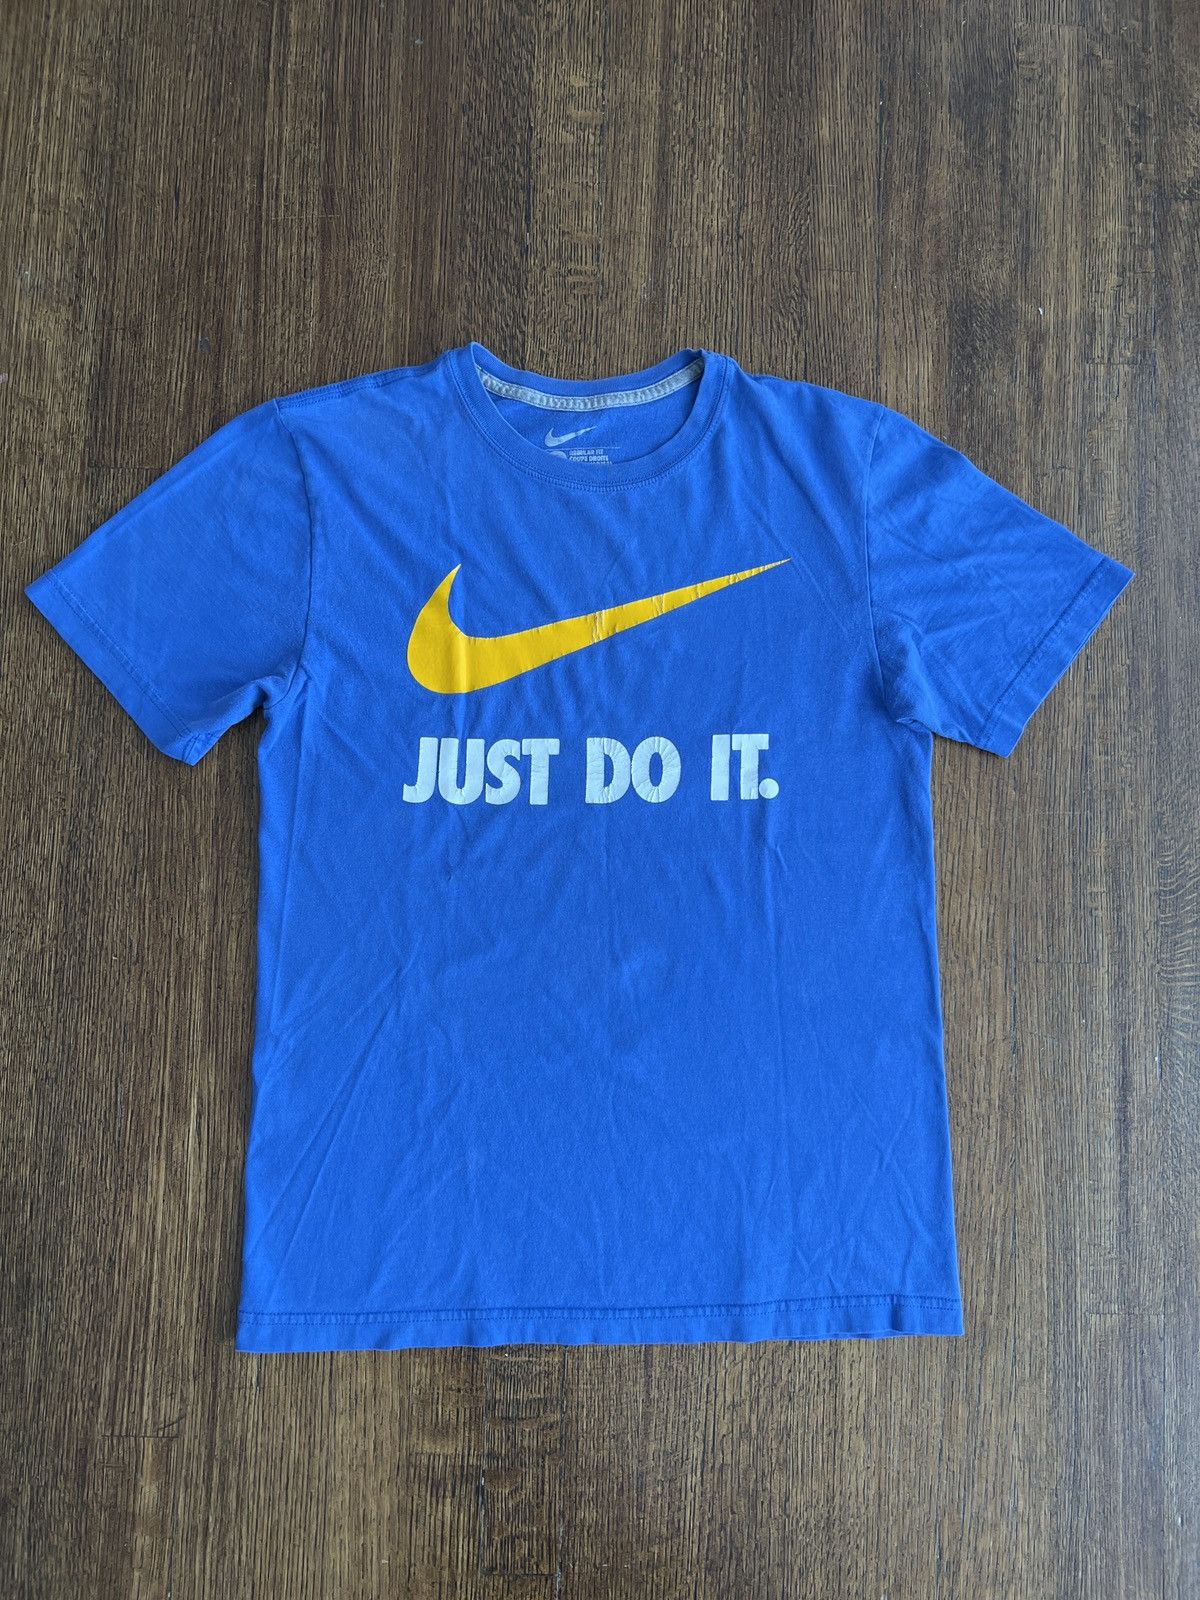 Nike Vintage Nike Just Do It shirt | Grailed